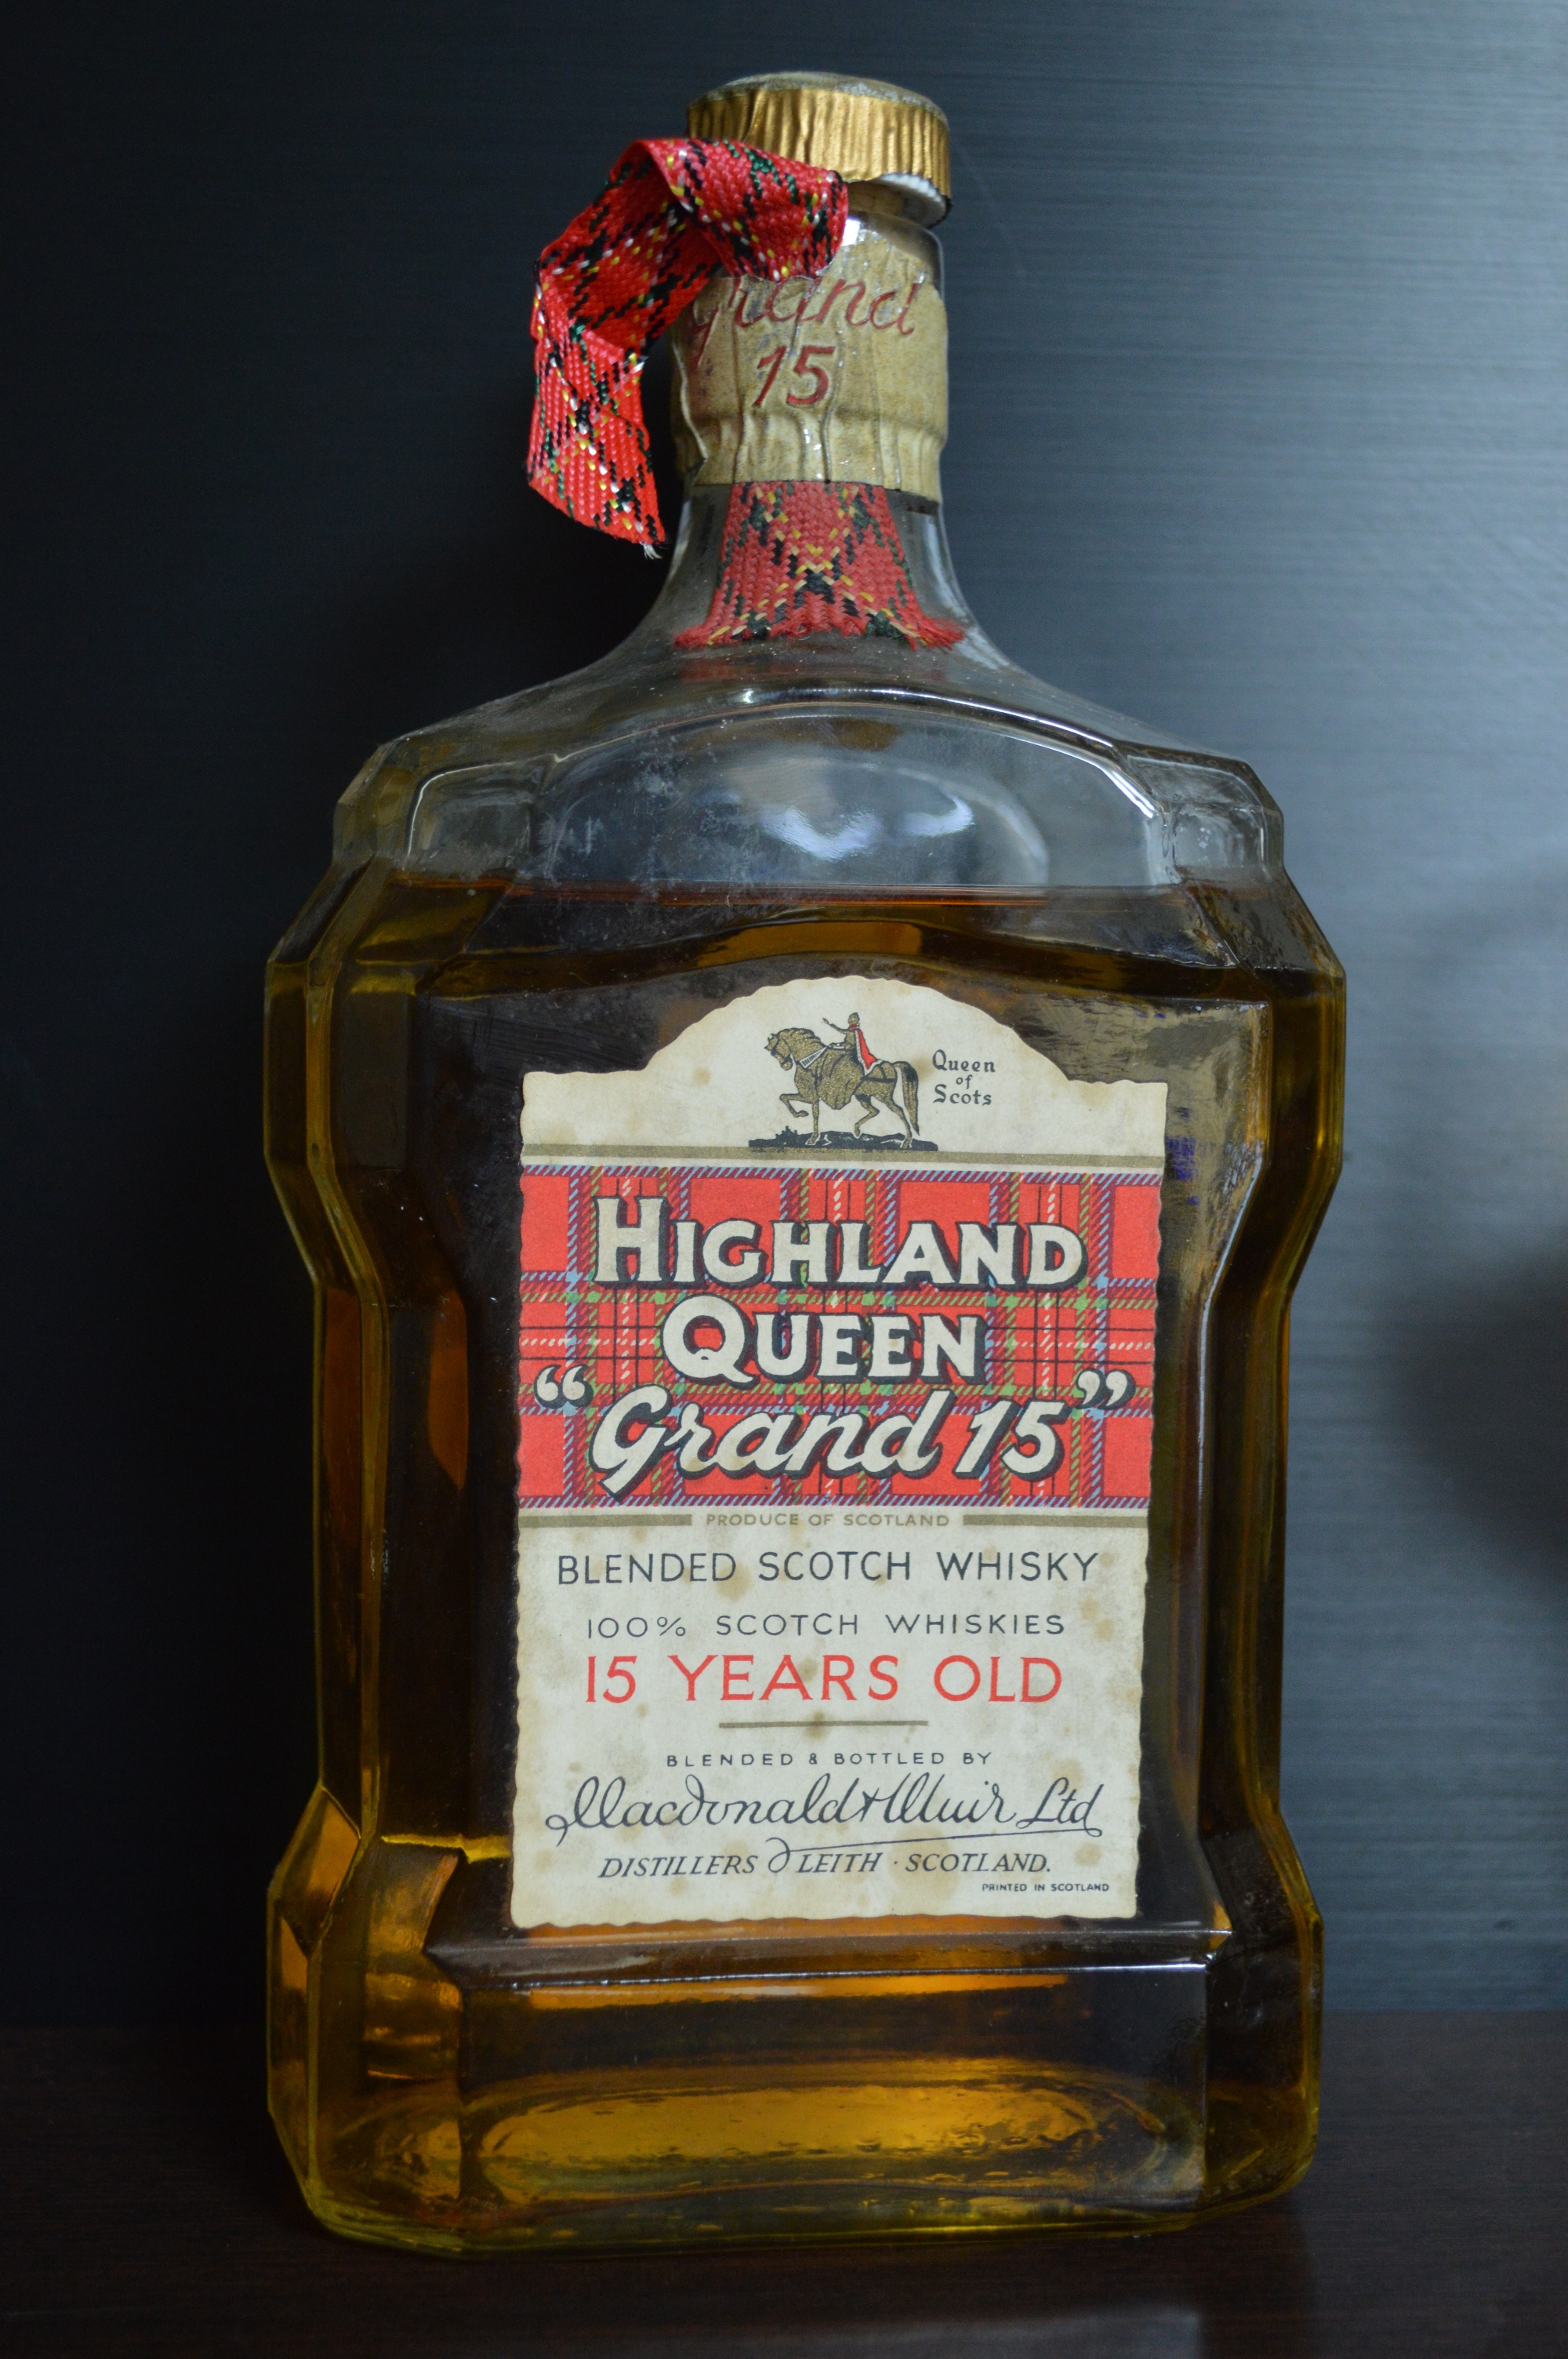 Highland Queen 15yo (80proof, Macdonald & Muir, 75cl) “Grand 15” 1950’s